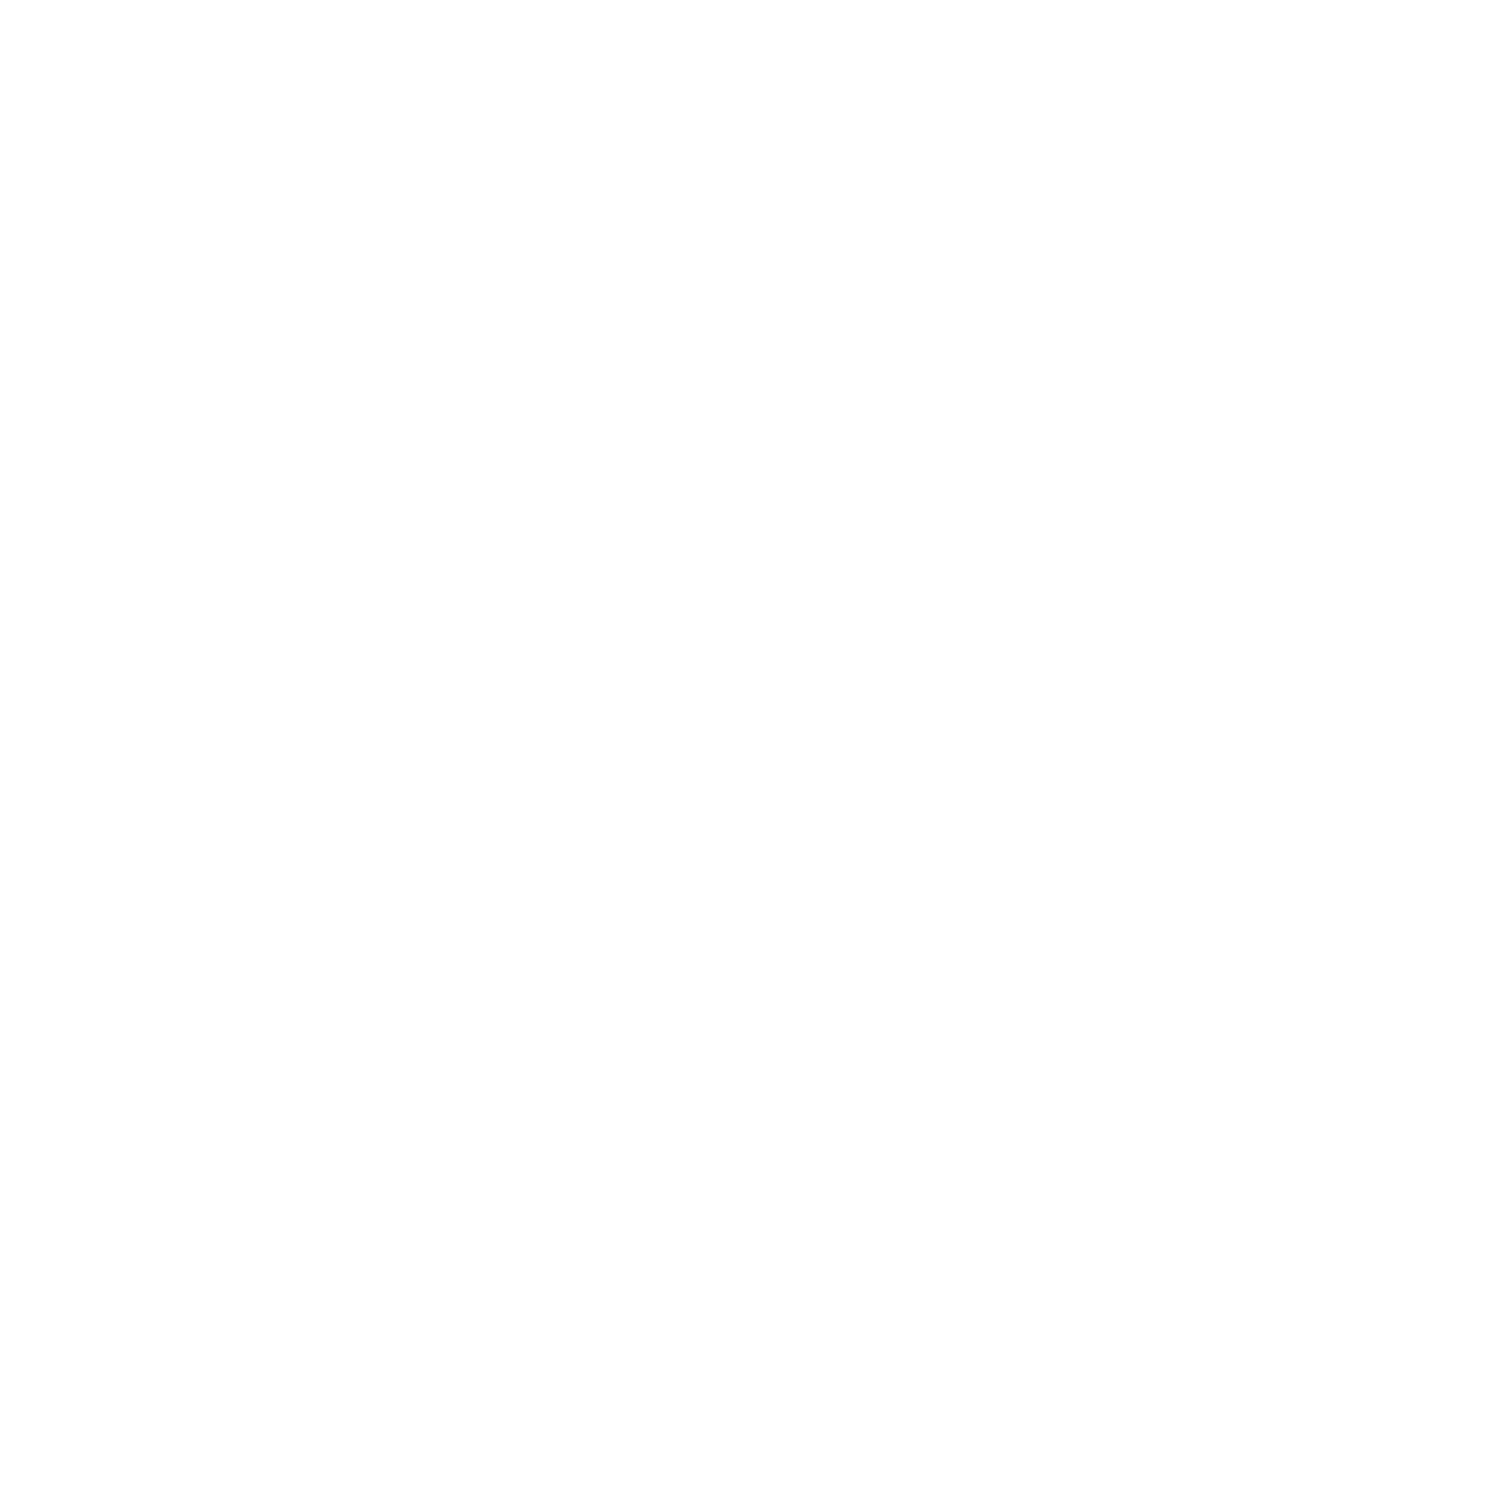 Shaka Wear Garment Dye White Heavyweight T-Shirt